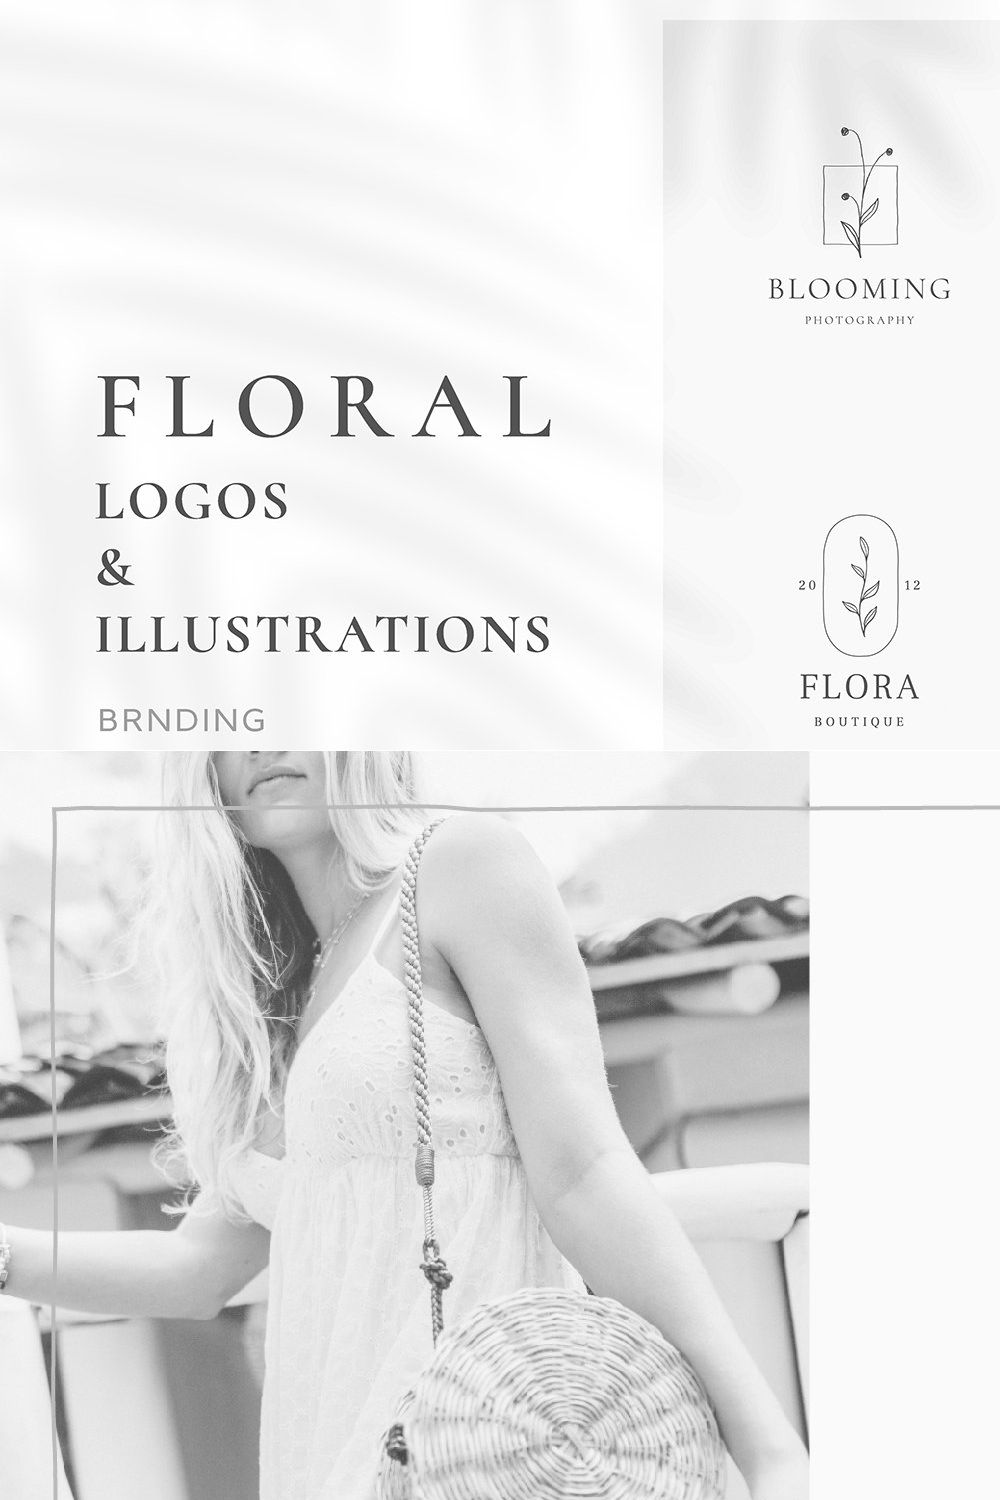 Floral Logos & Illustrations pinterest preview image.